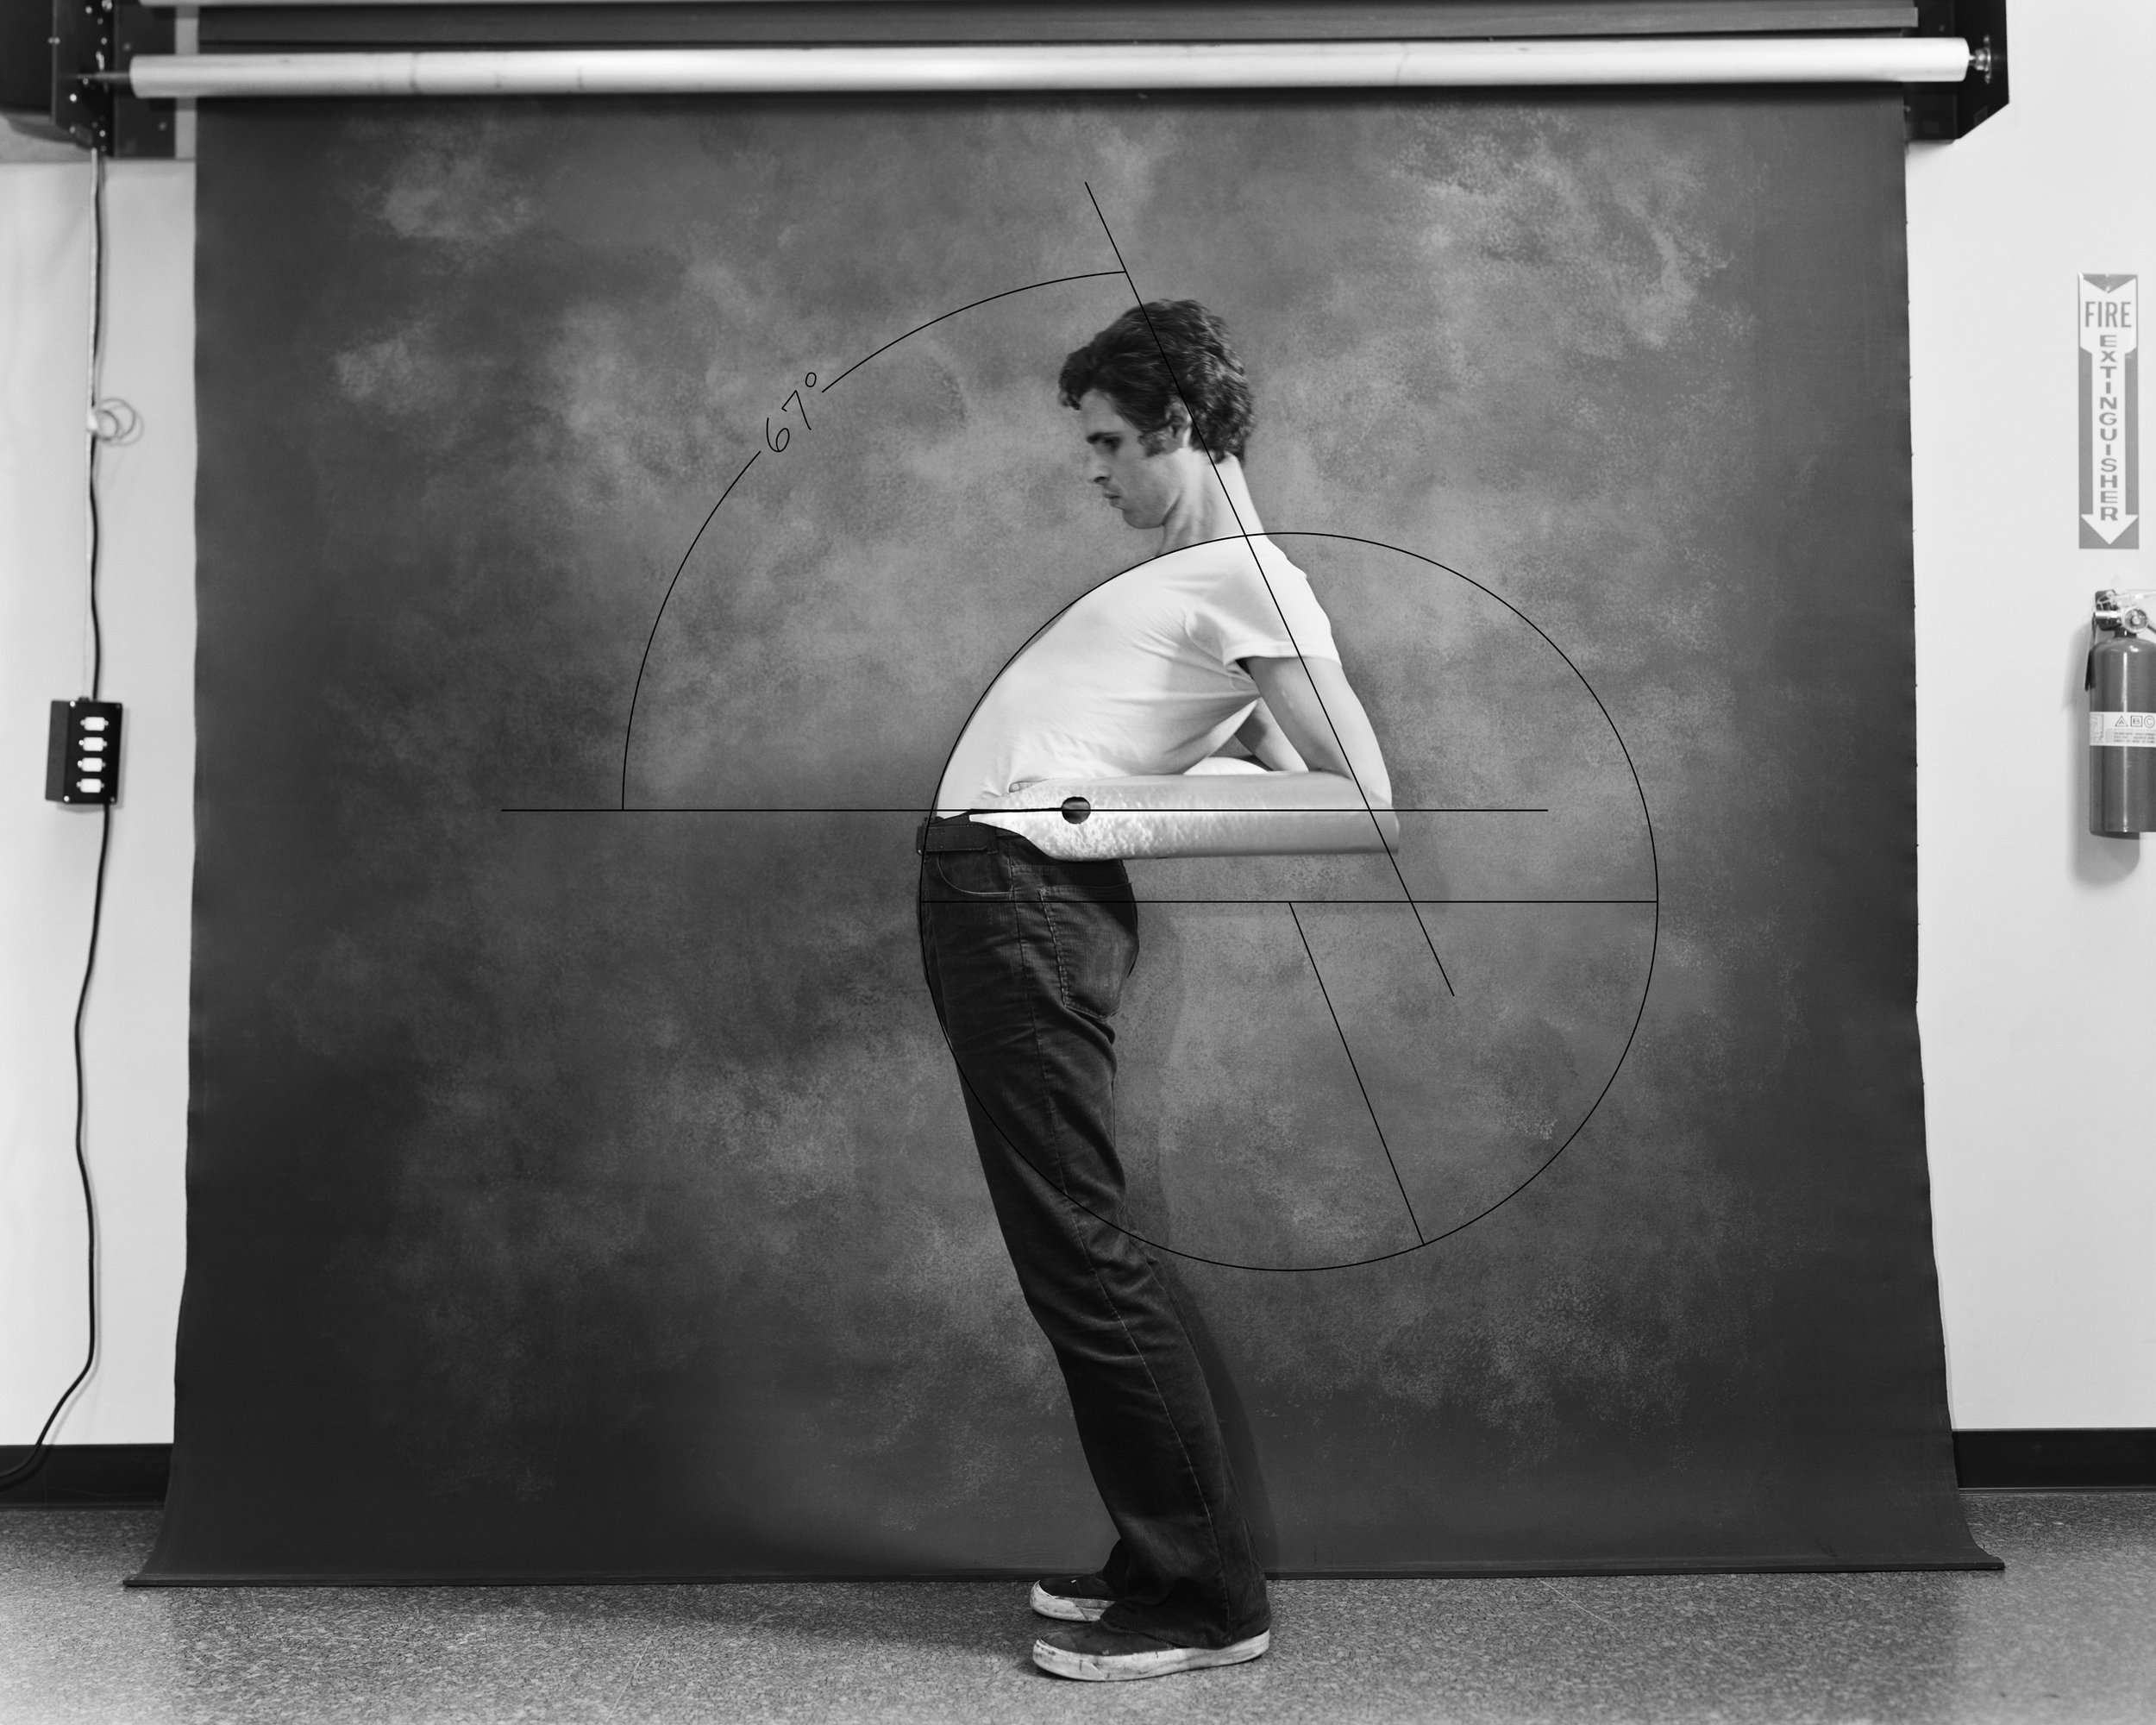  Robert Cumming  67-Degree Body Arc Off Circle Center , 1975/2020 archival digital pigment print 60 x 80 in&nbsp; (152.4 x 203.2 cm) 